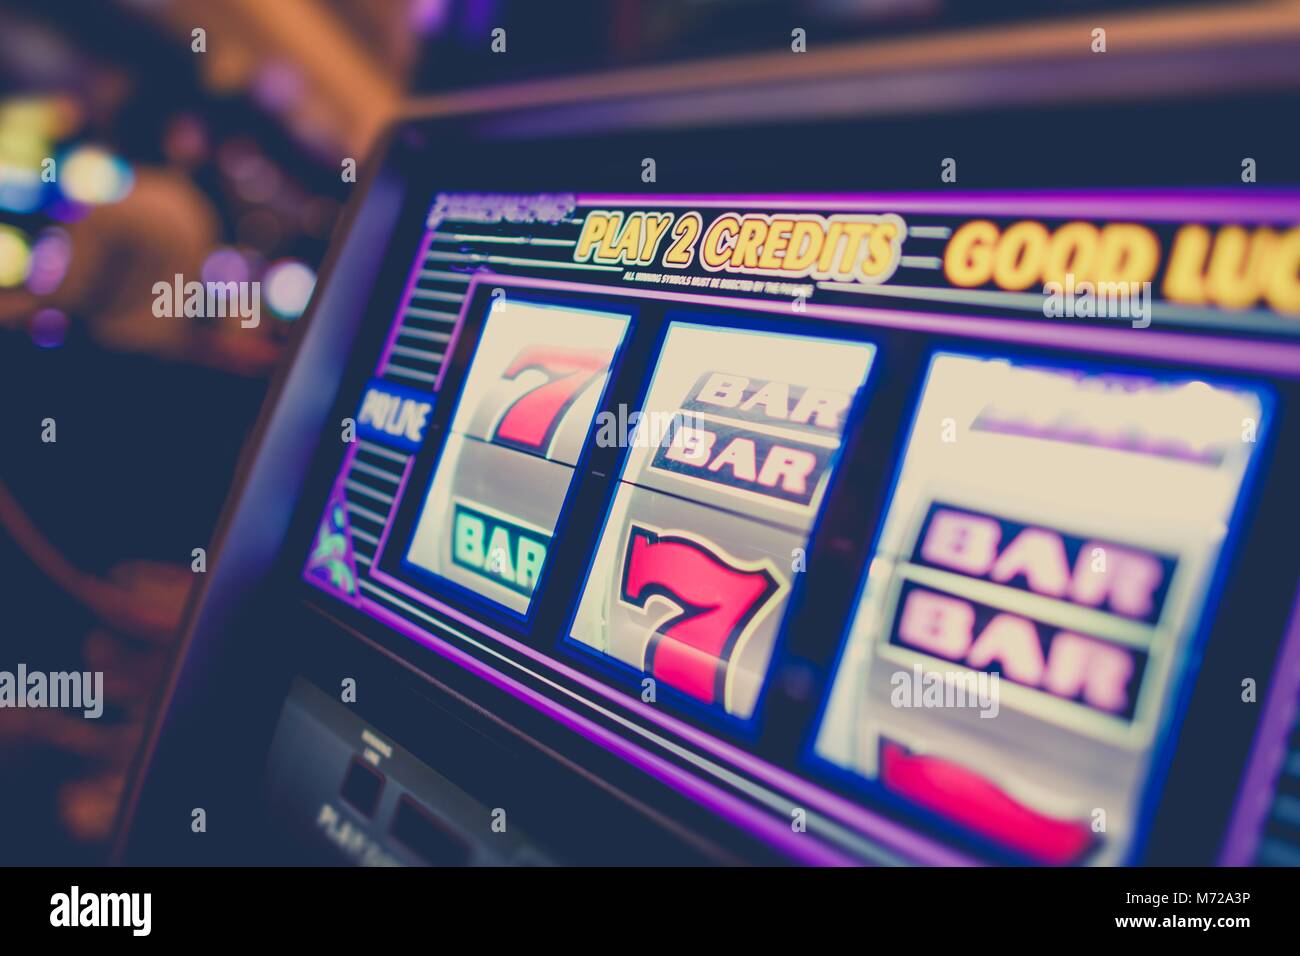 Casino Slot Machine Closeup Photo. Classic Las Vegas Style One Handed Bandit Slot Game. Stock Photo